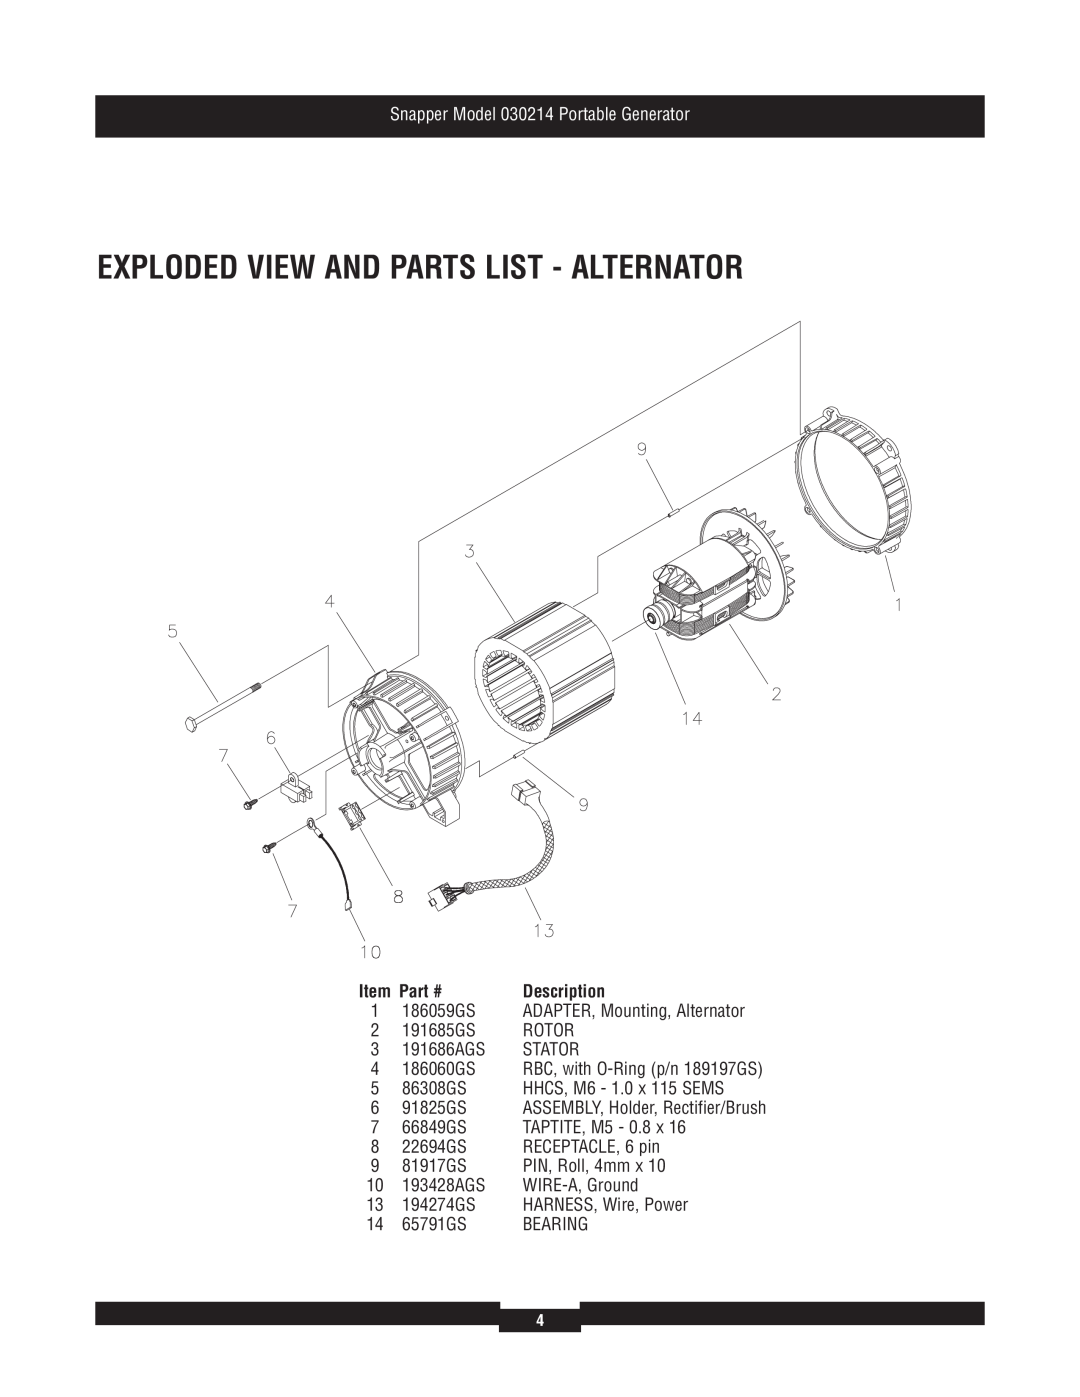 Snapper Exploded View And Parts List - Alternator, Description, Snapper Model 030214 Portable Generator, Item Part # 